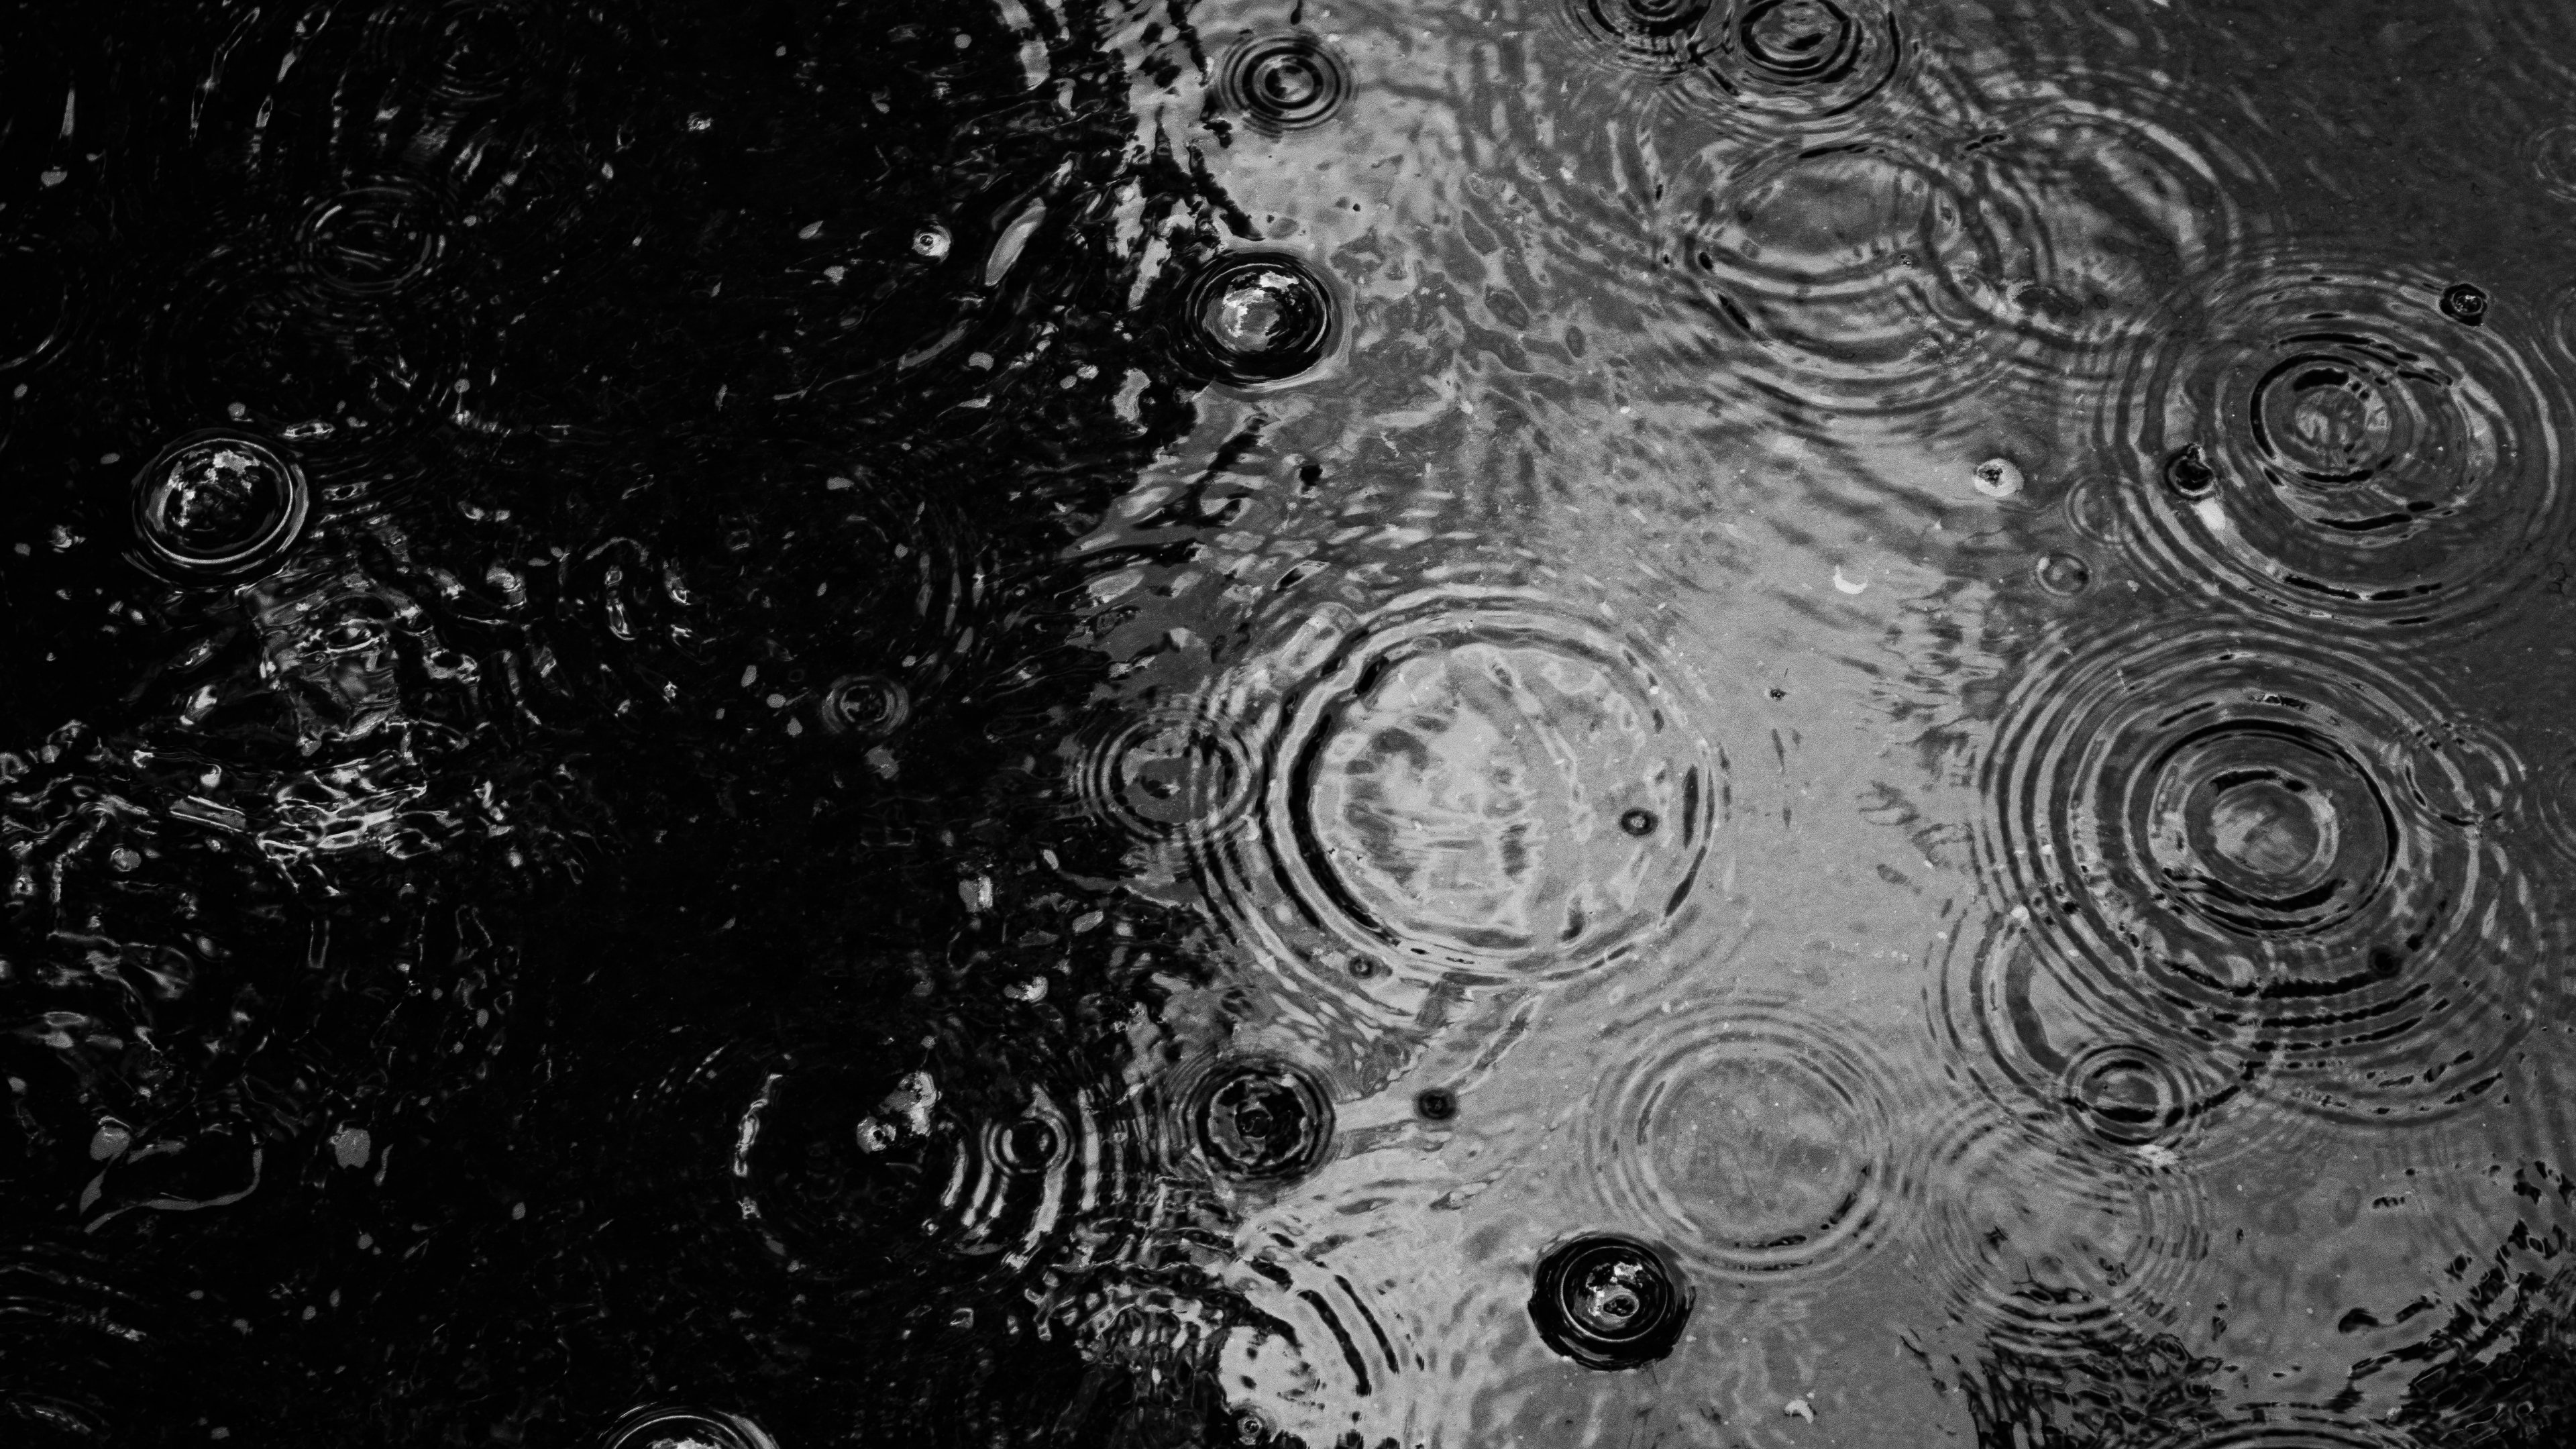 Ripple, puddle, water droplets Wallpaper 3840x2160 4K Ultra HD